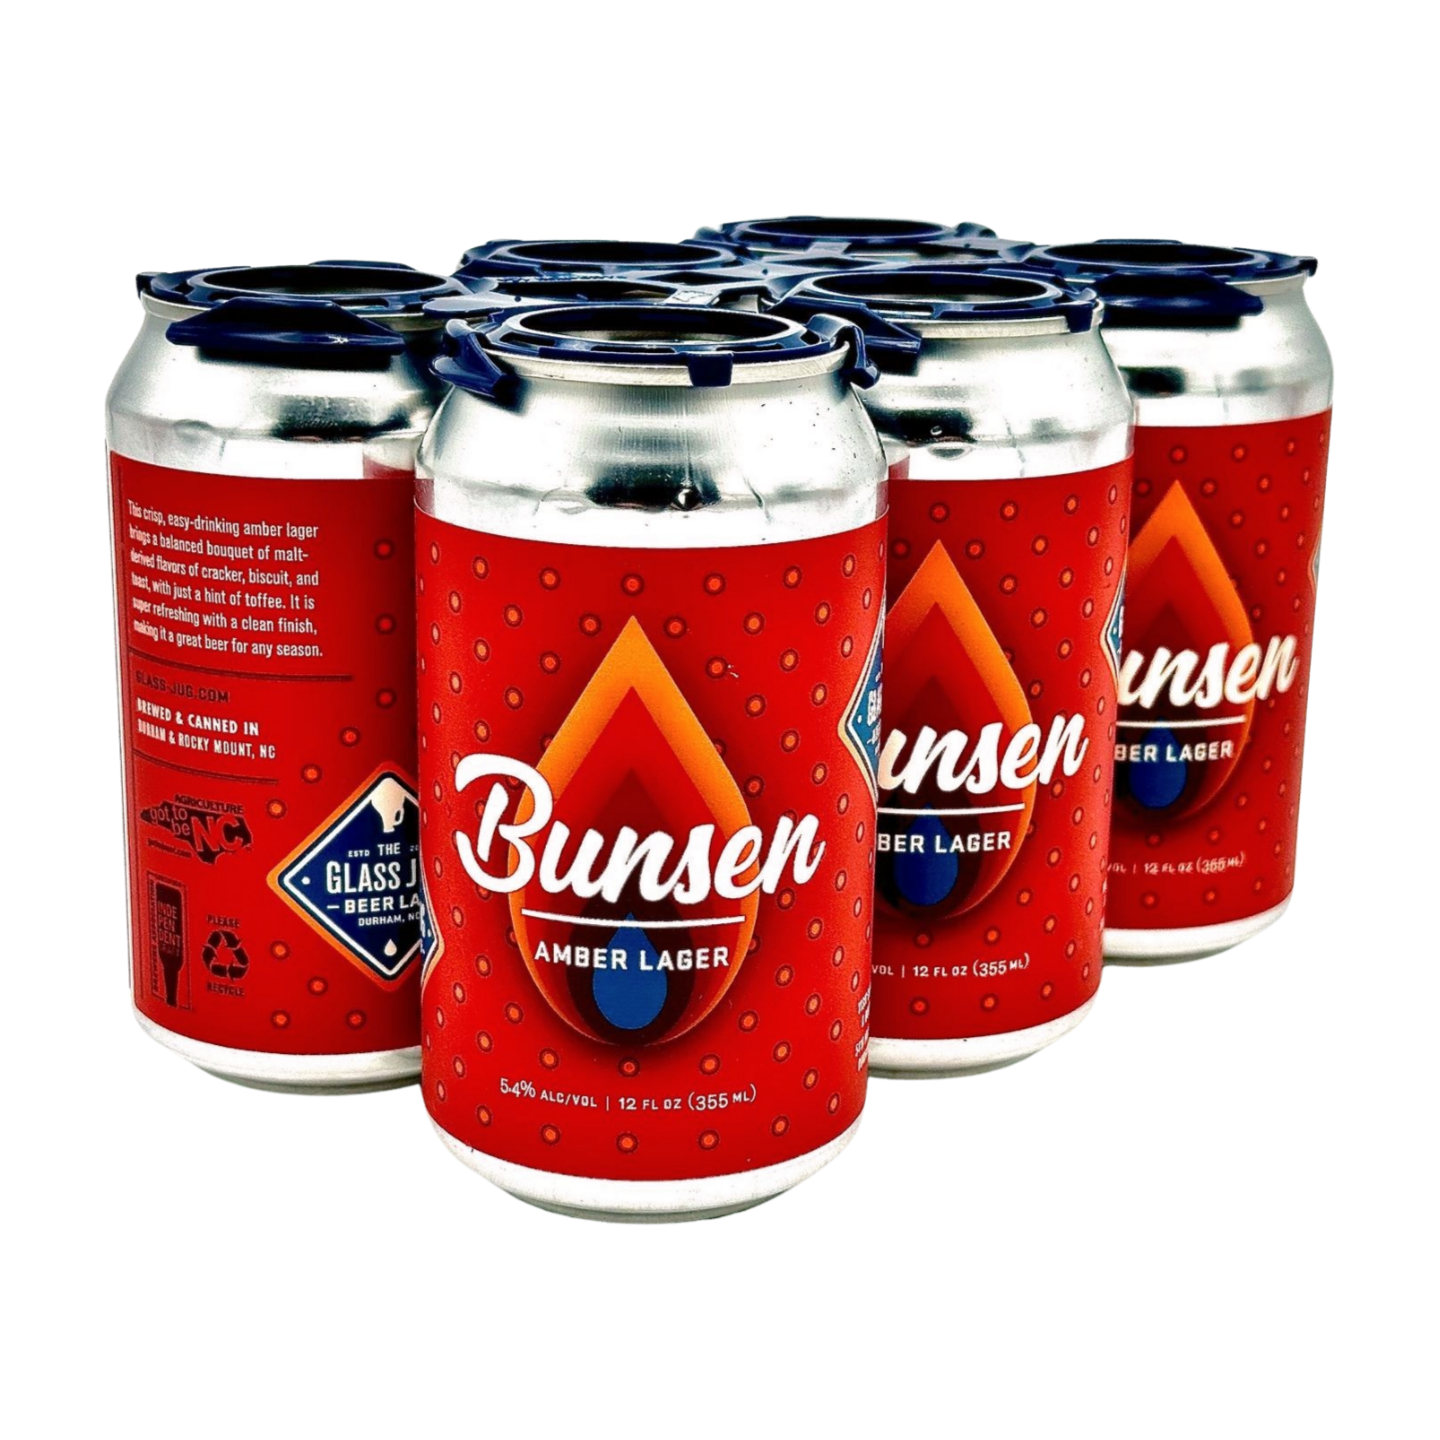 Bunsen, 12 oz cans, 6 pack